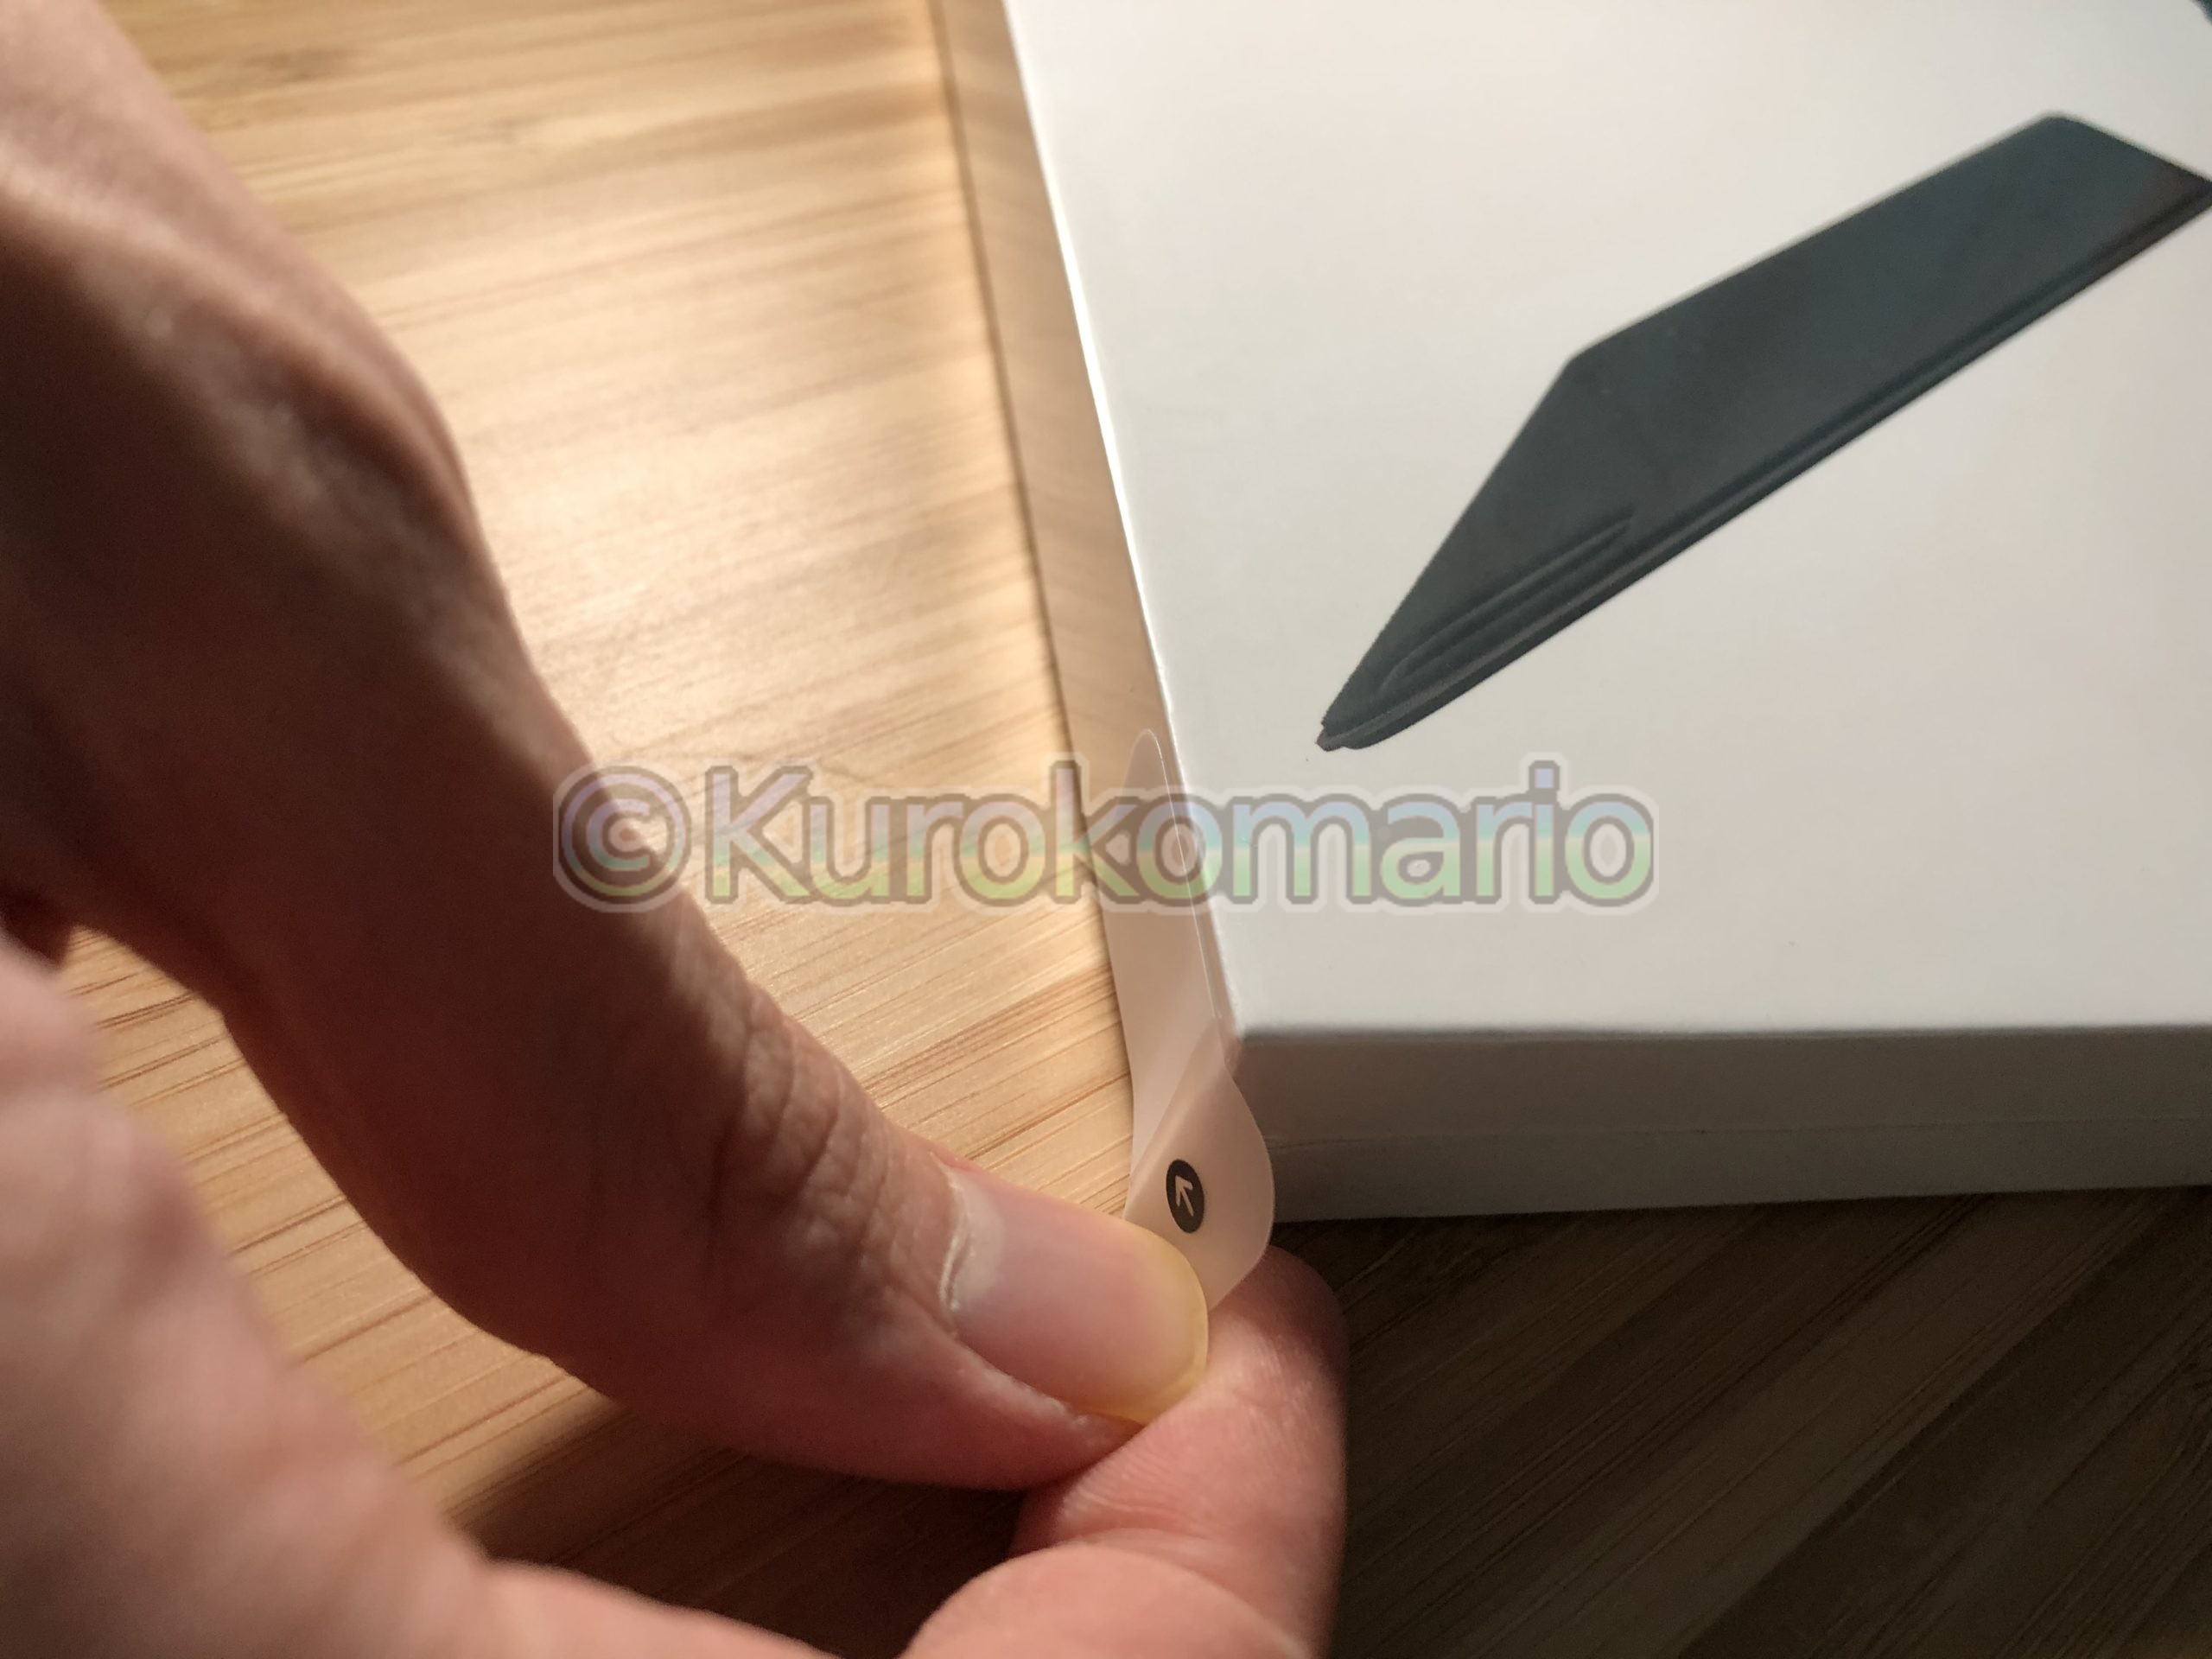 【Apple】Smart Keyboad Folioを買ったので開封 | Kurokomarioの日記